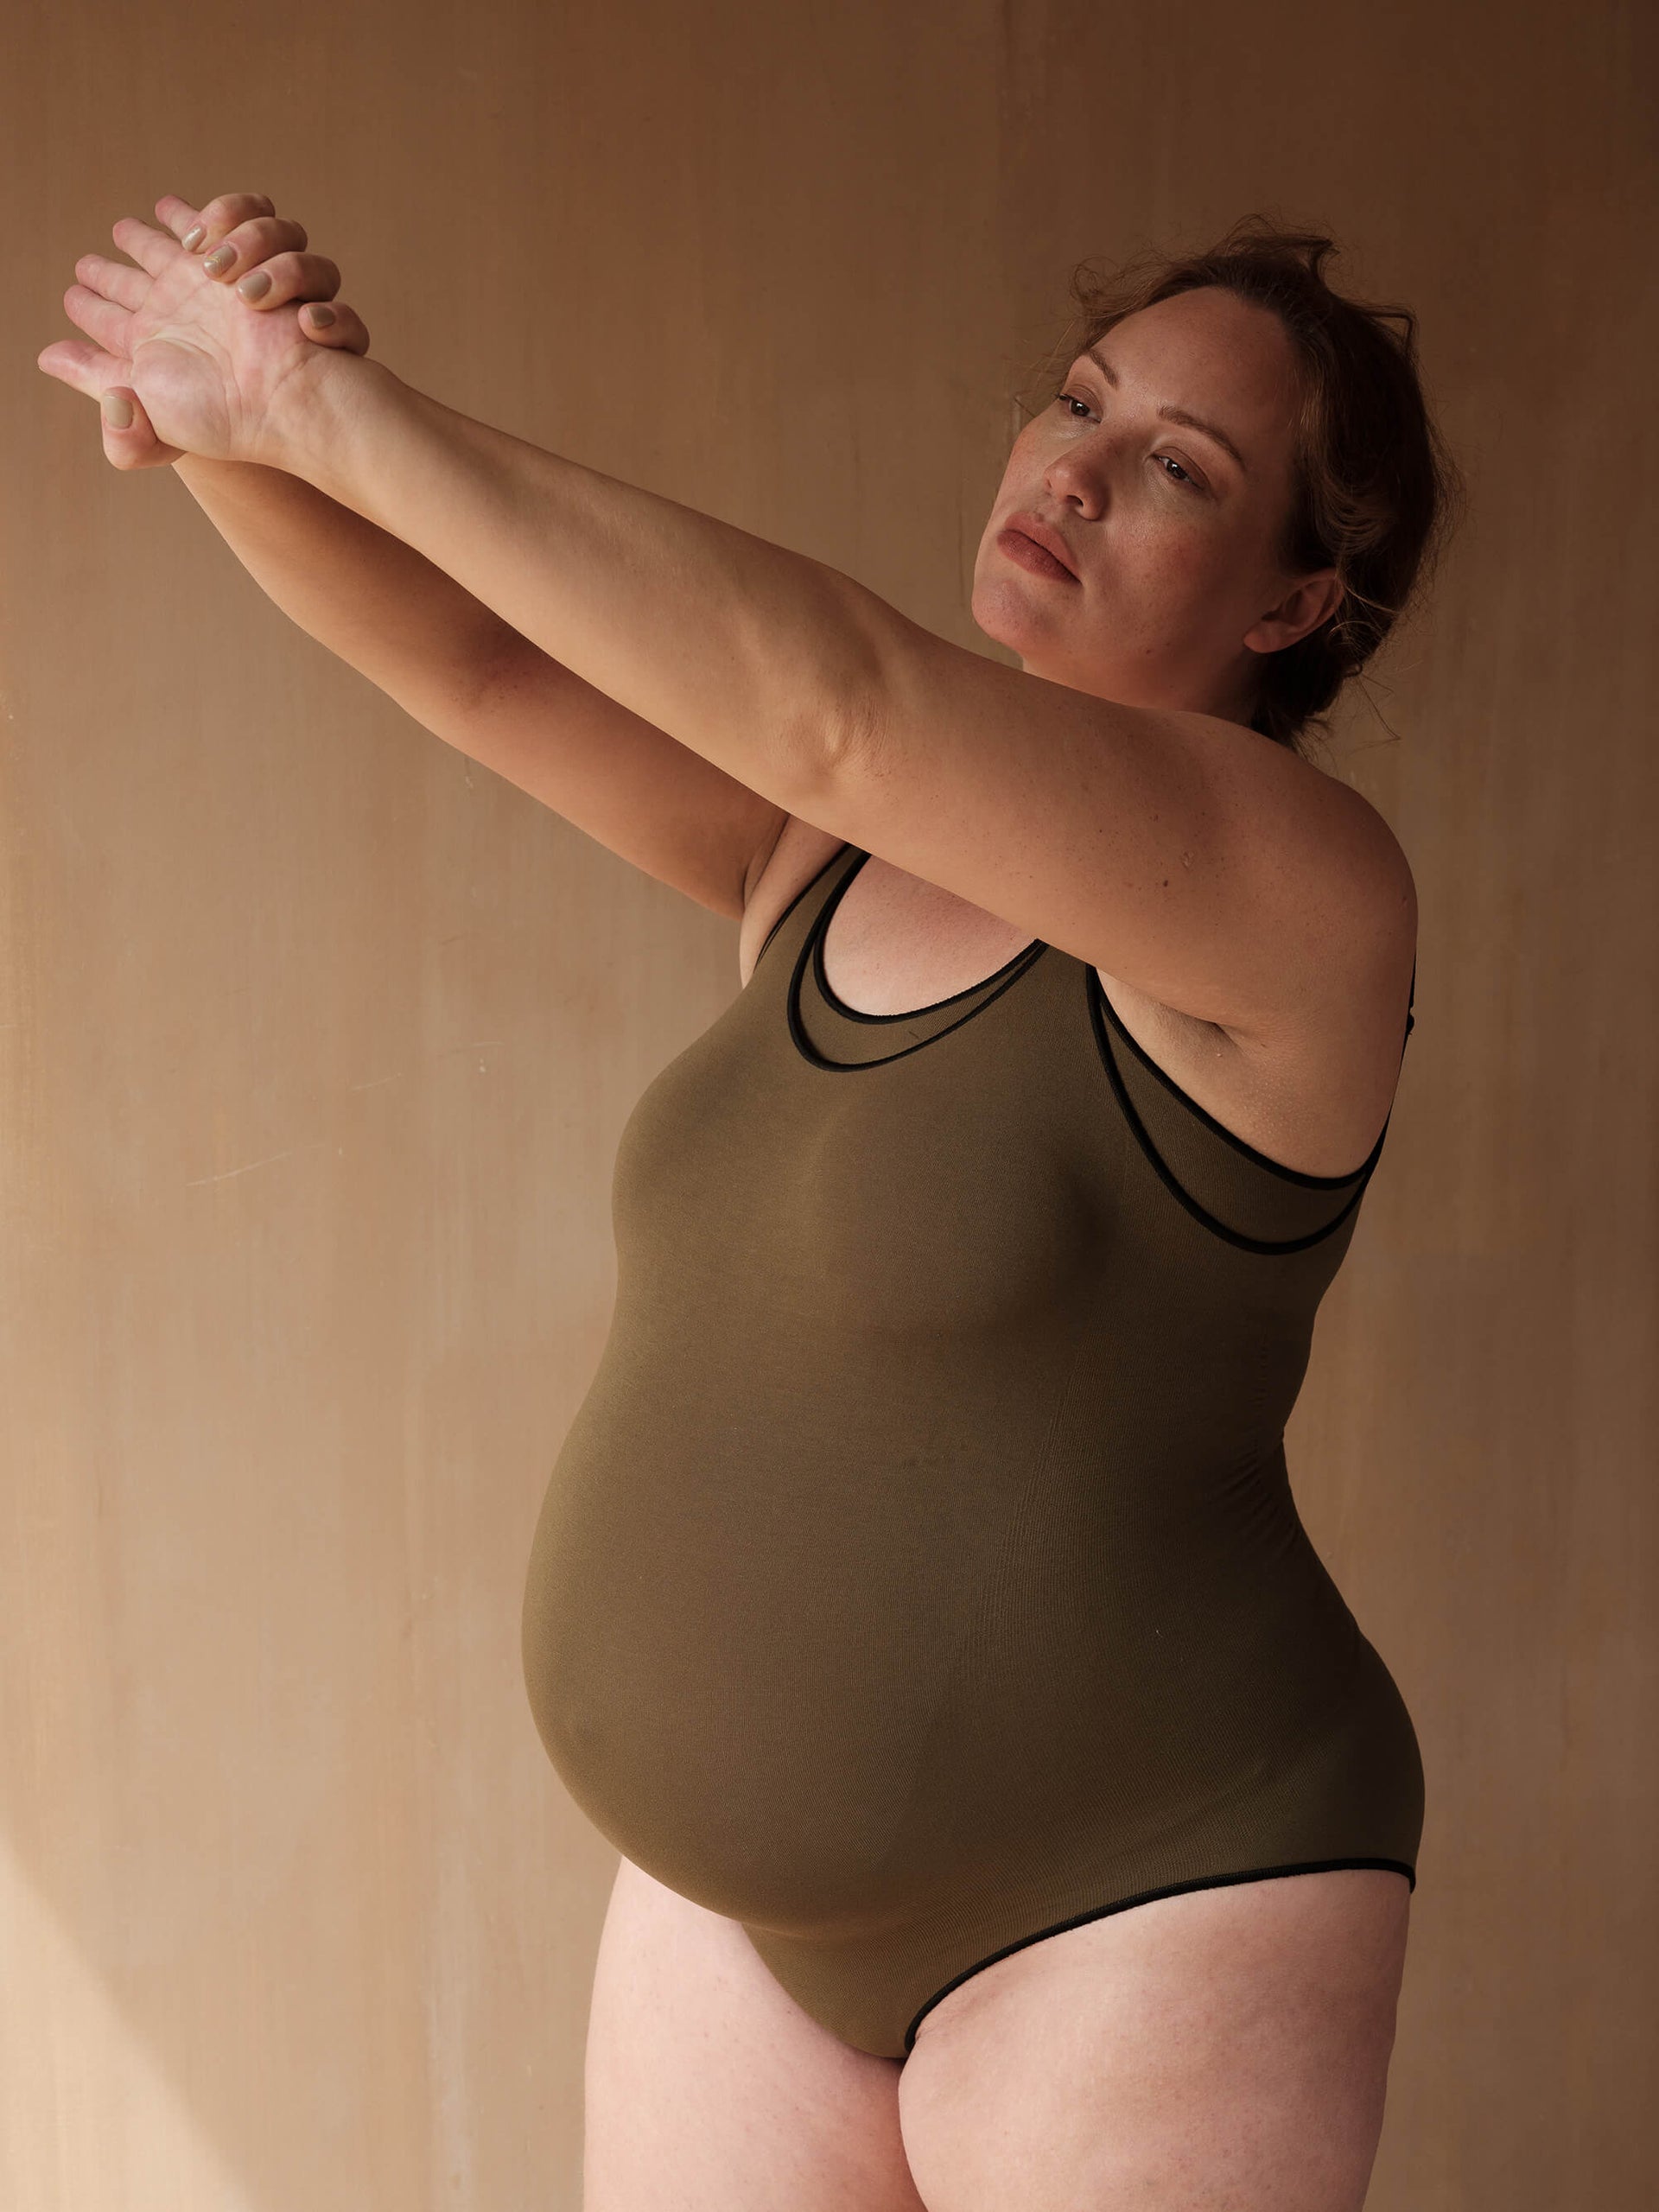 Jorgen House Dark olive green maternity strap bodysuit on pregnant female body